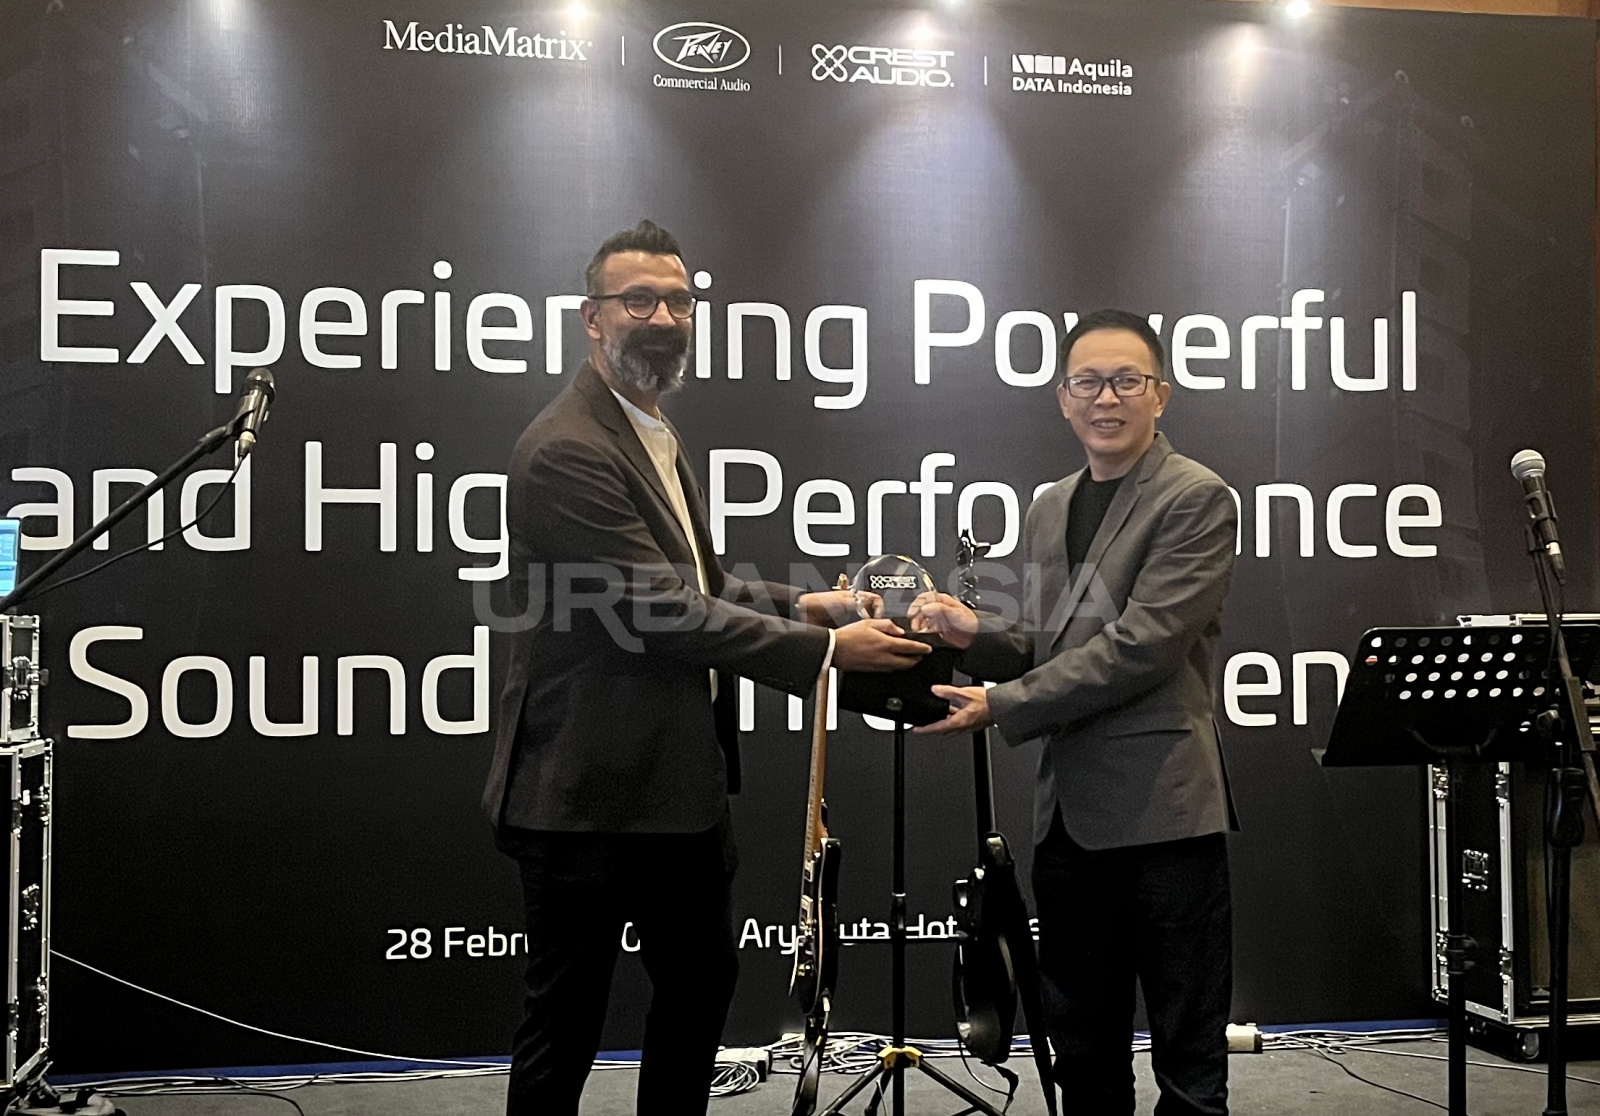 Crest Audio dan Aquila Data Indonesia Kolaborasi Garap Pasar Audio Tanah Air